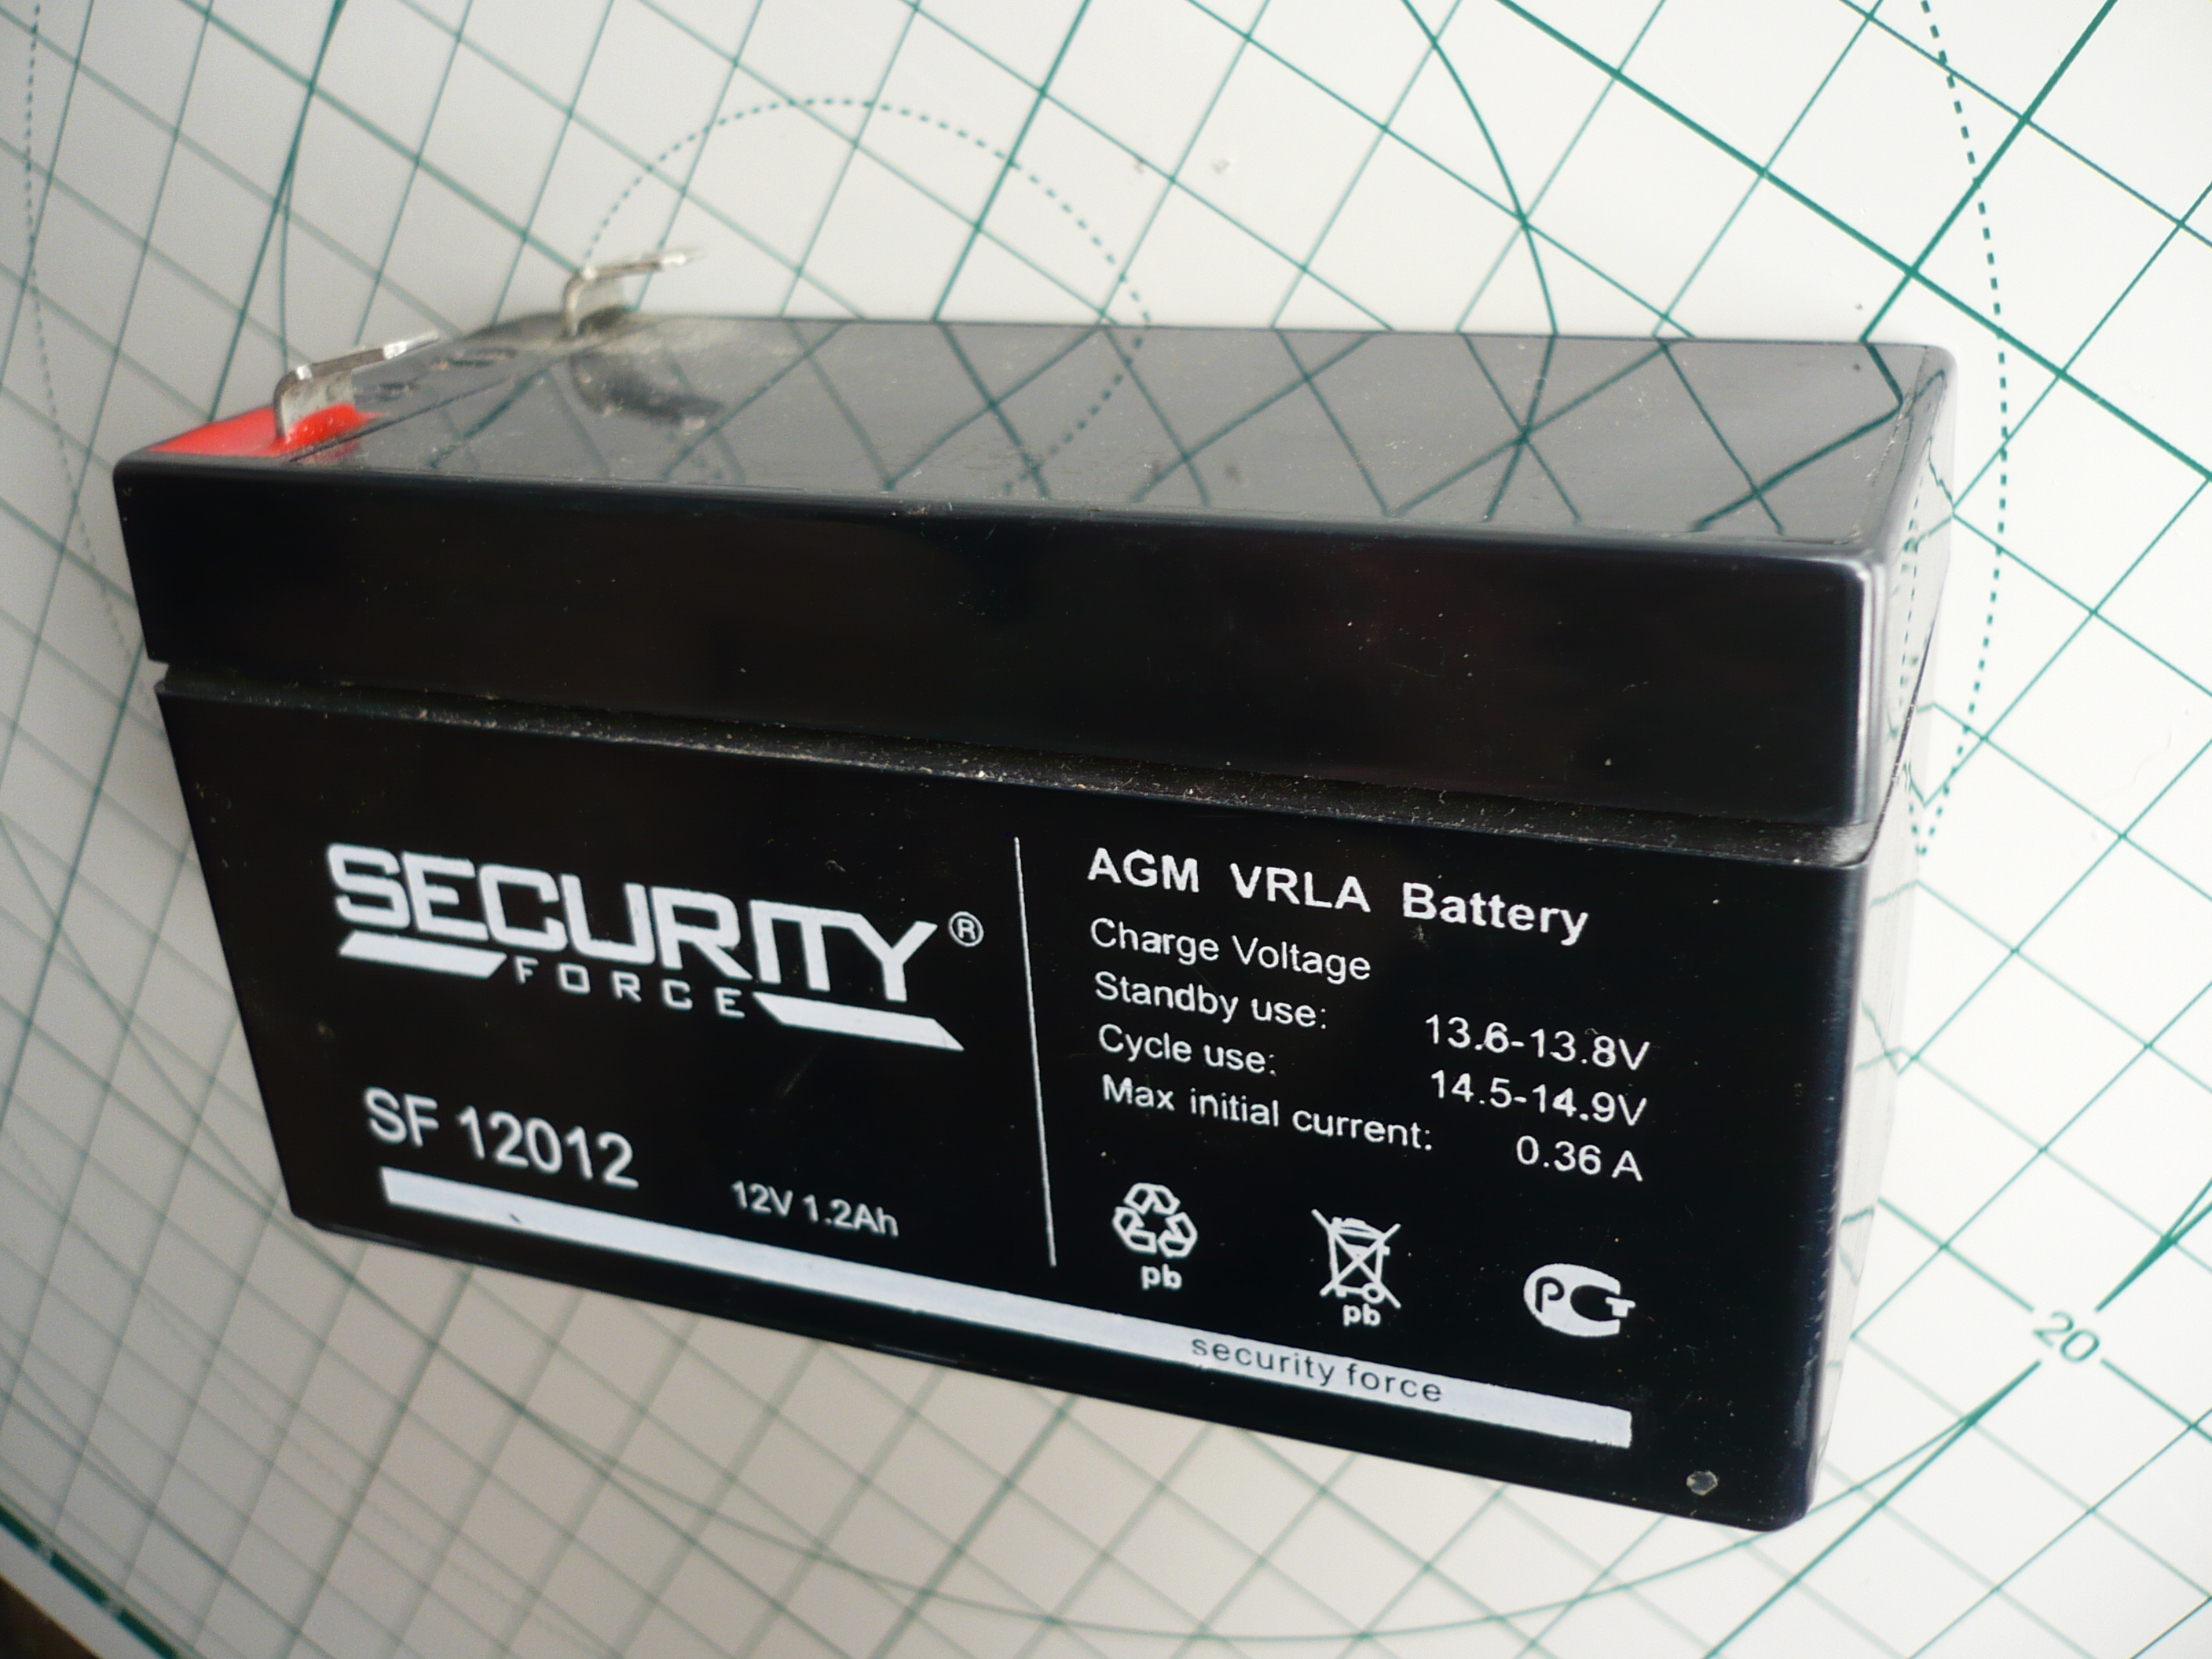 Agm vrla battery 12v. Security Force аккумулятор 12v/7ah AGM VRLA. Заряжаем аккумулятор AGM 12v. Батарея w b r AGM VRLA Battery. Райдер АГМ аккумулятор.